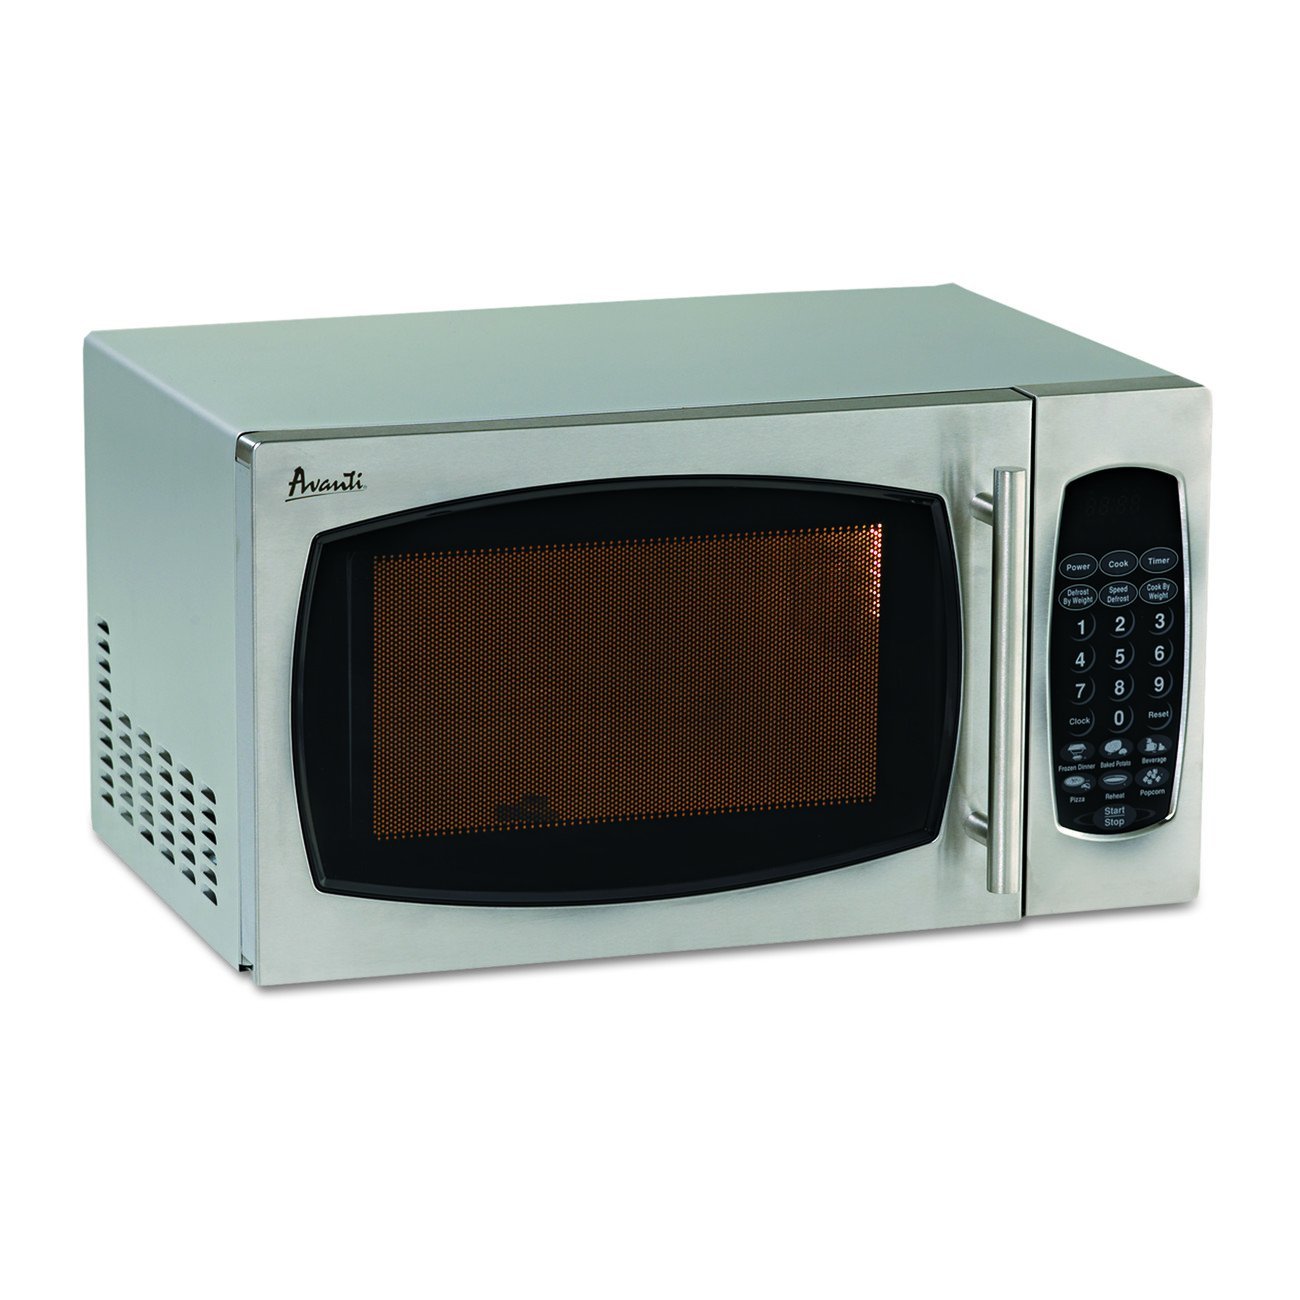 Avanti AVAMO9003SST Microwave Oven, Stainless Steel